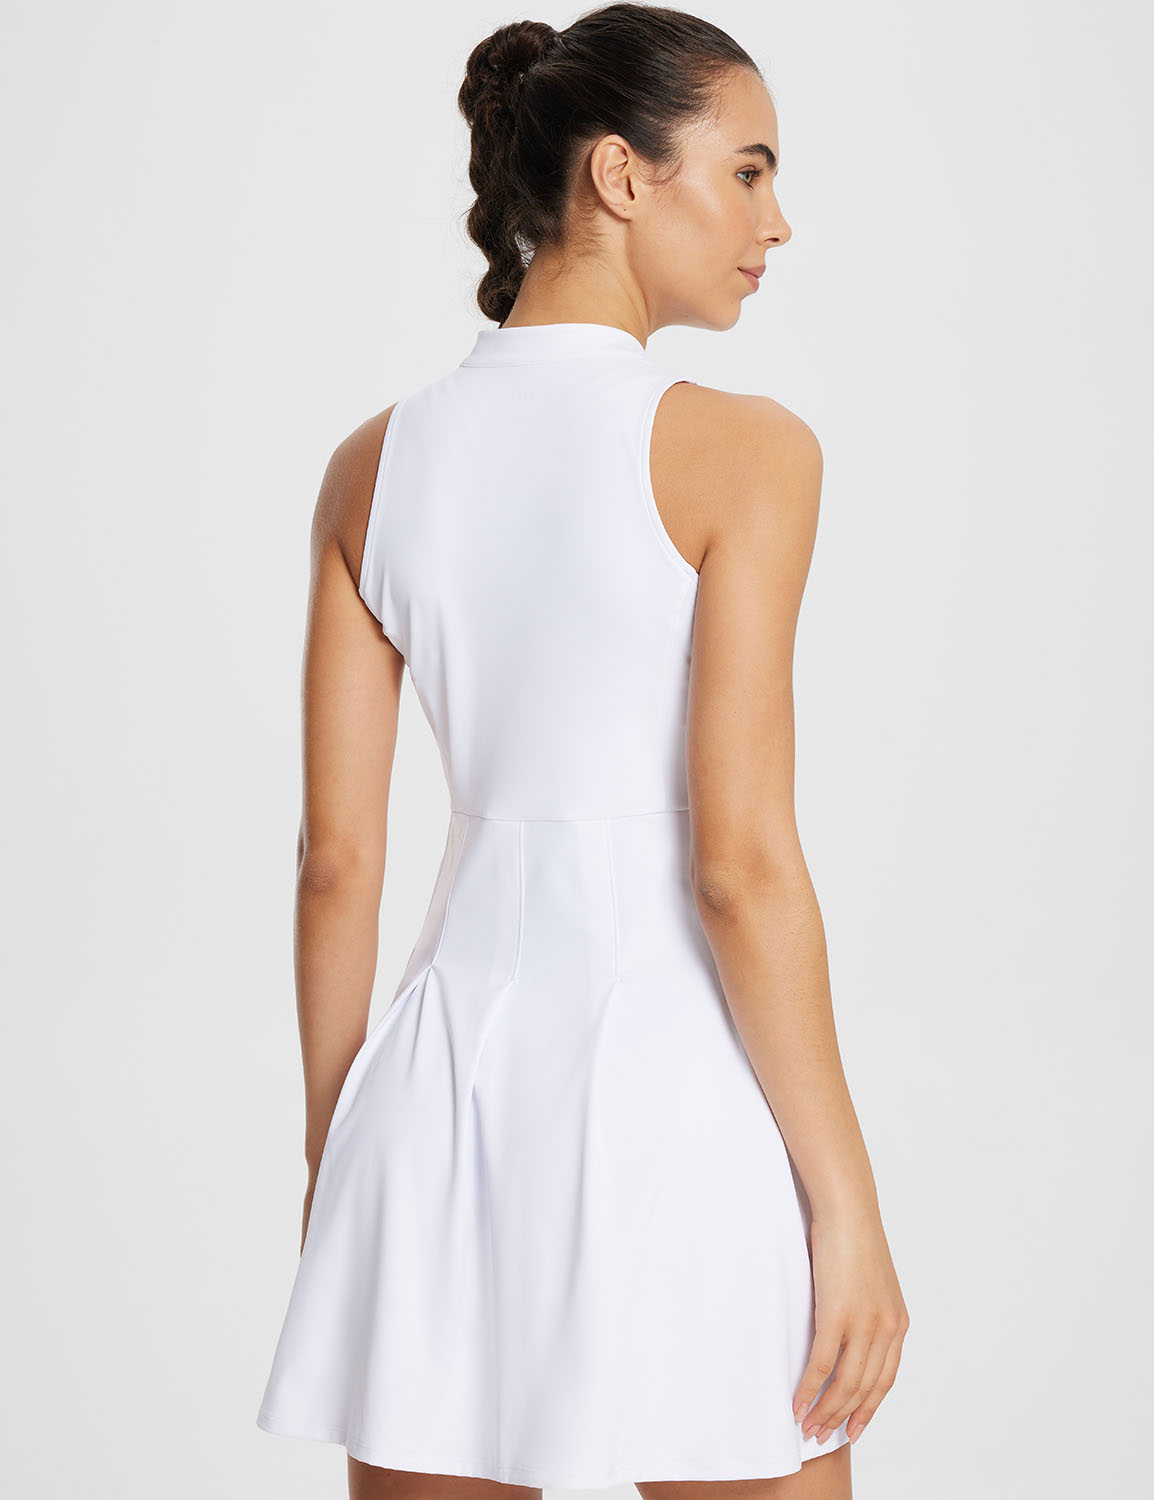 Baleaf Women's Laureate Sleeveless 2-in-1 Dress Lucent White Back